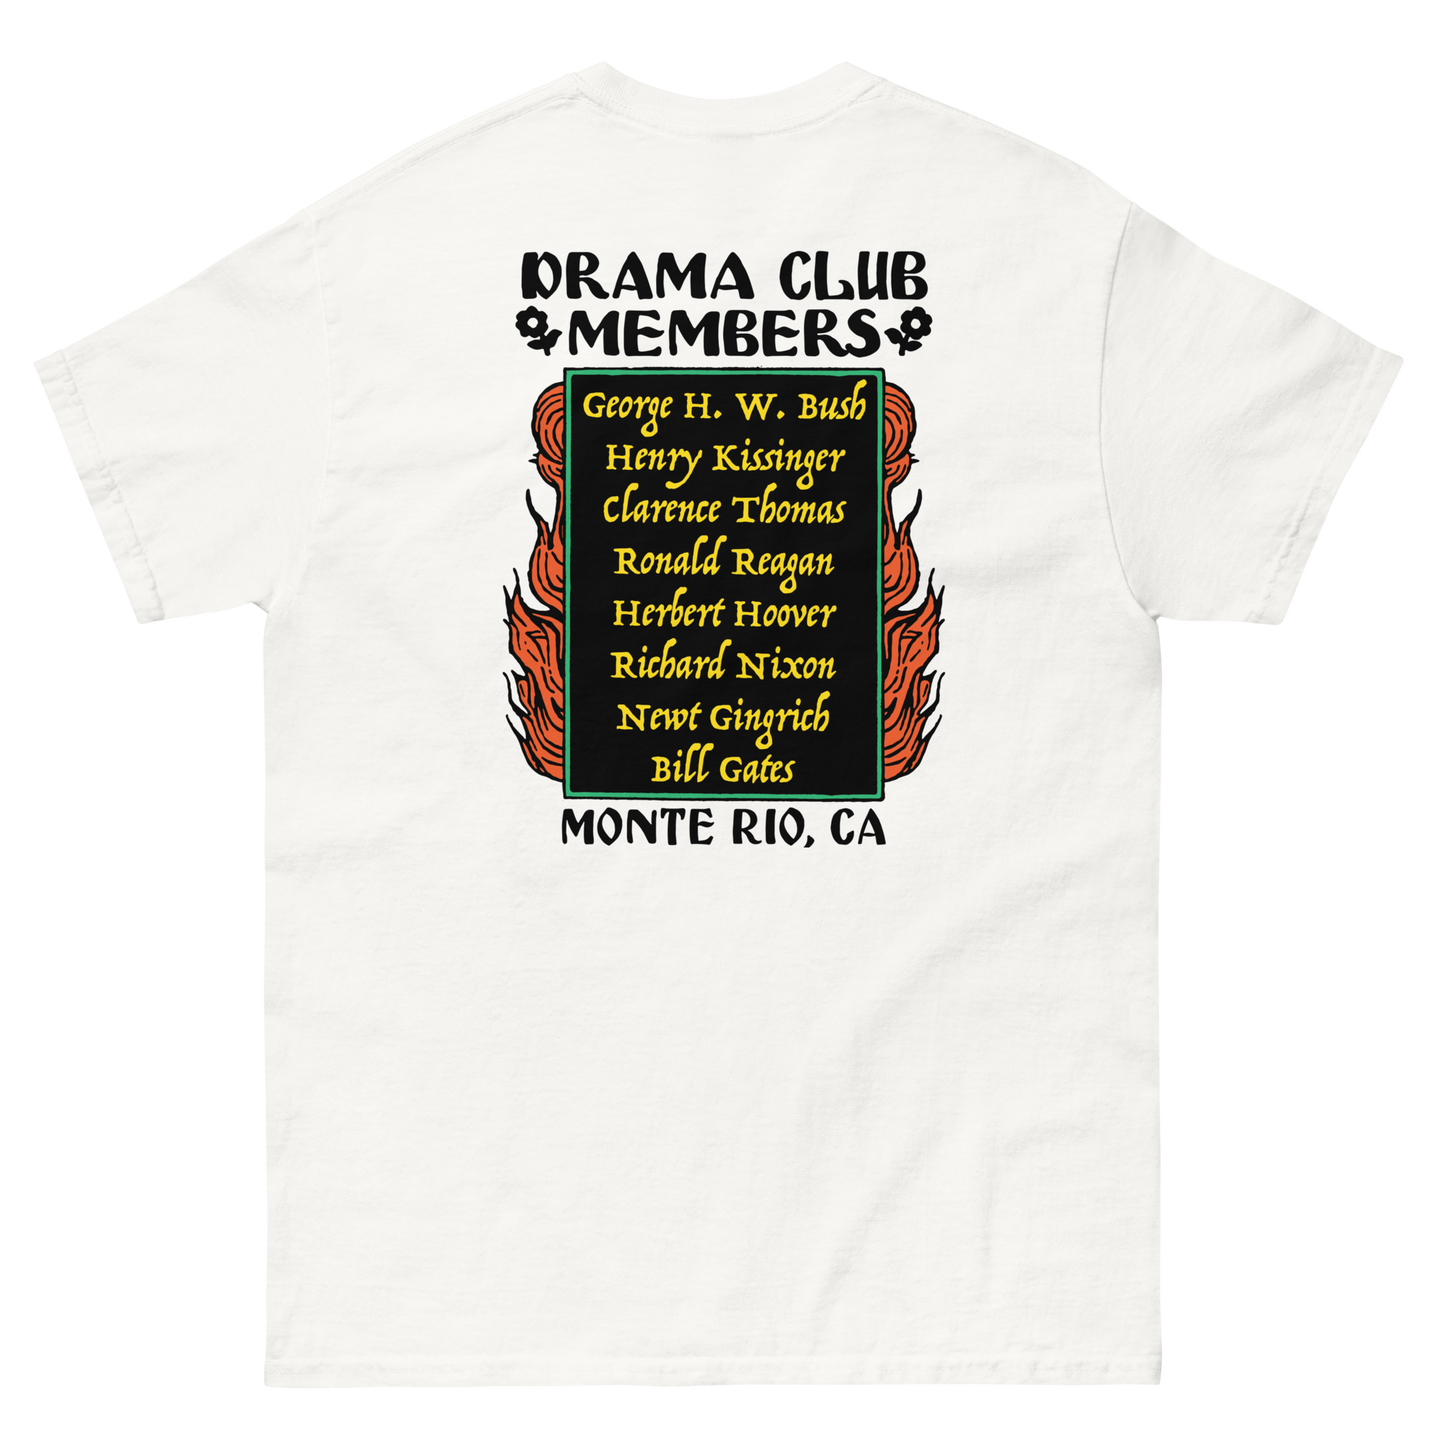 Bohemian Grove Drama Club.